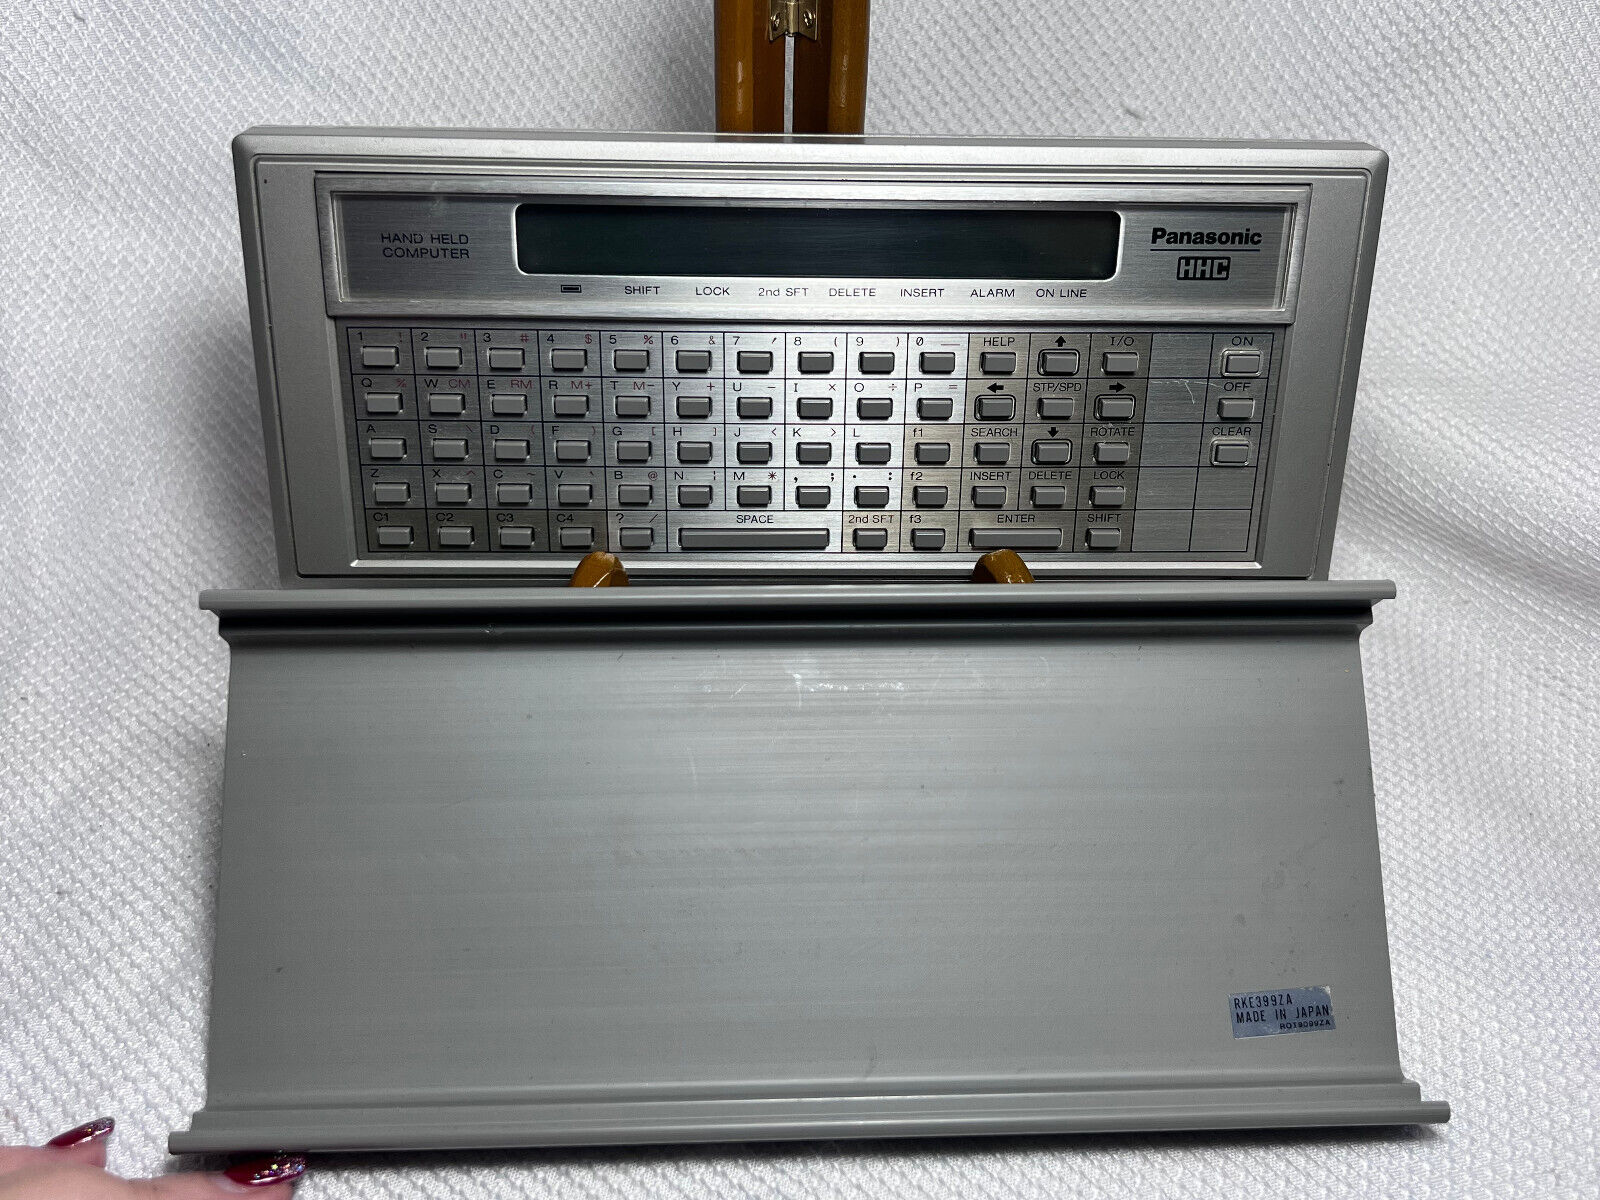 VTG Panasonic HHC Handheld Computer Model No RL-H1400 Untested Electronic